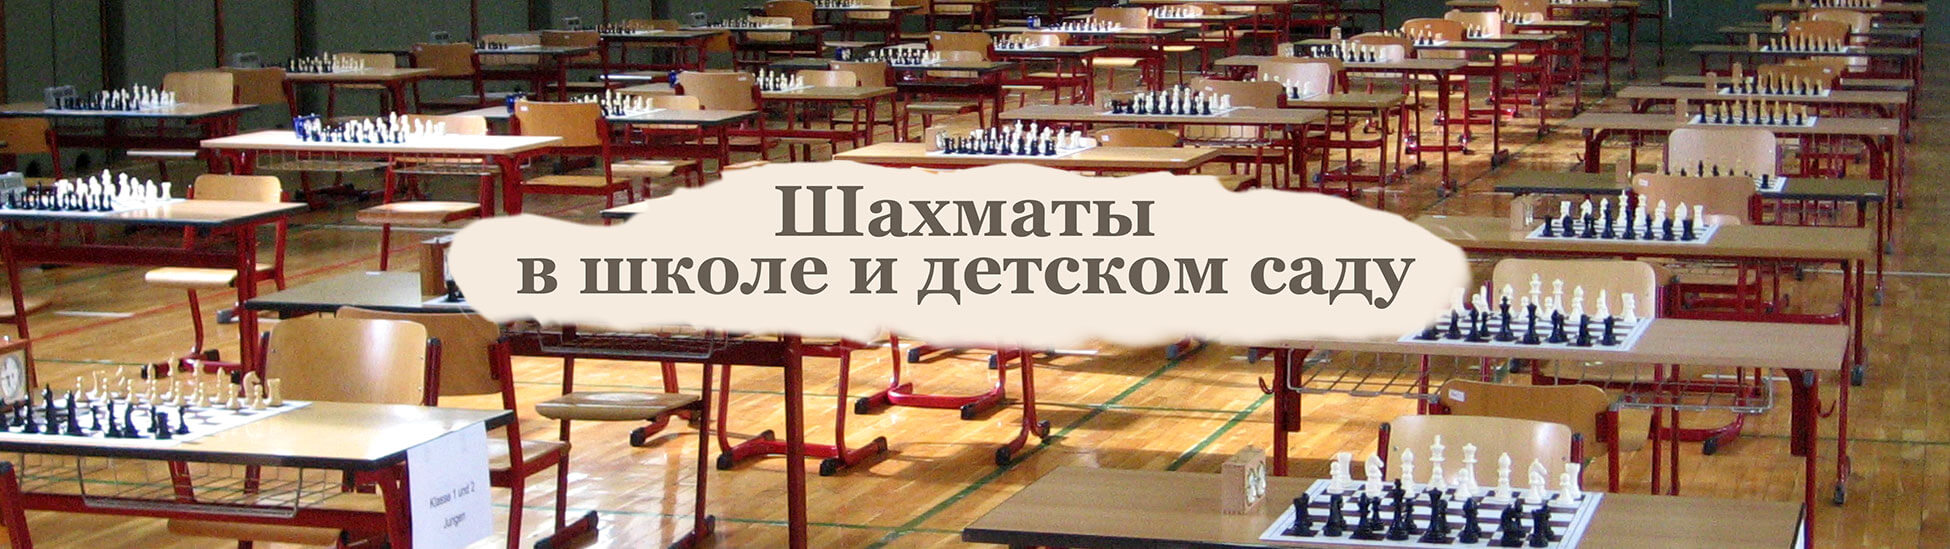 Шахматы в школе и детском саду